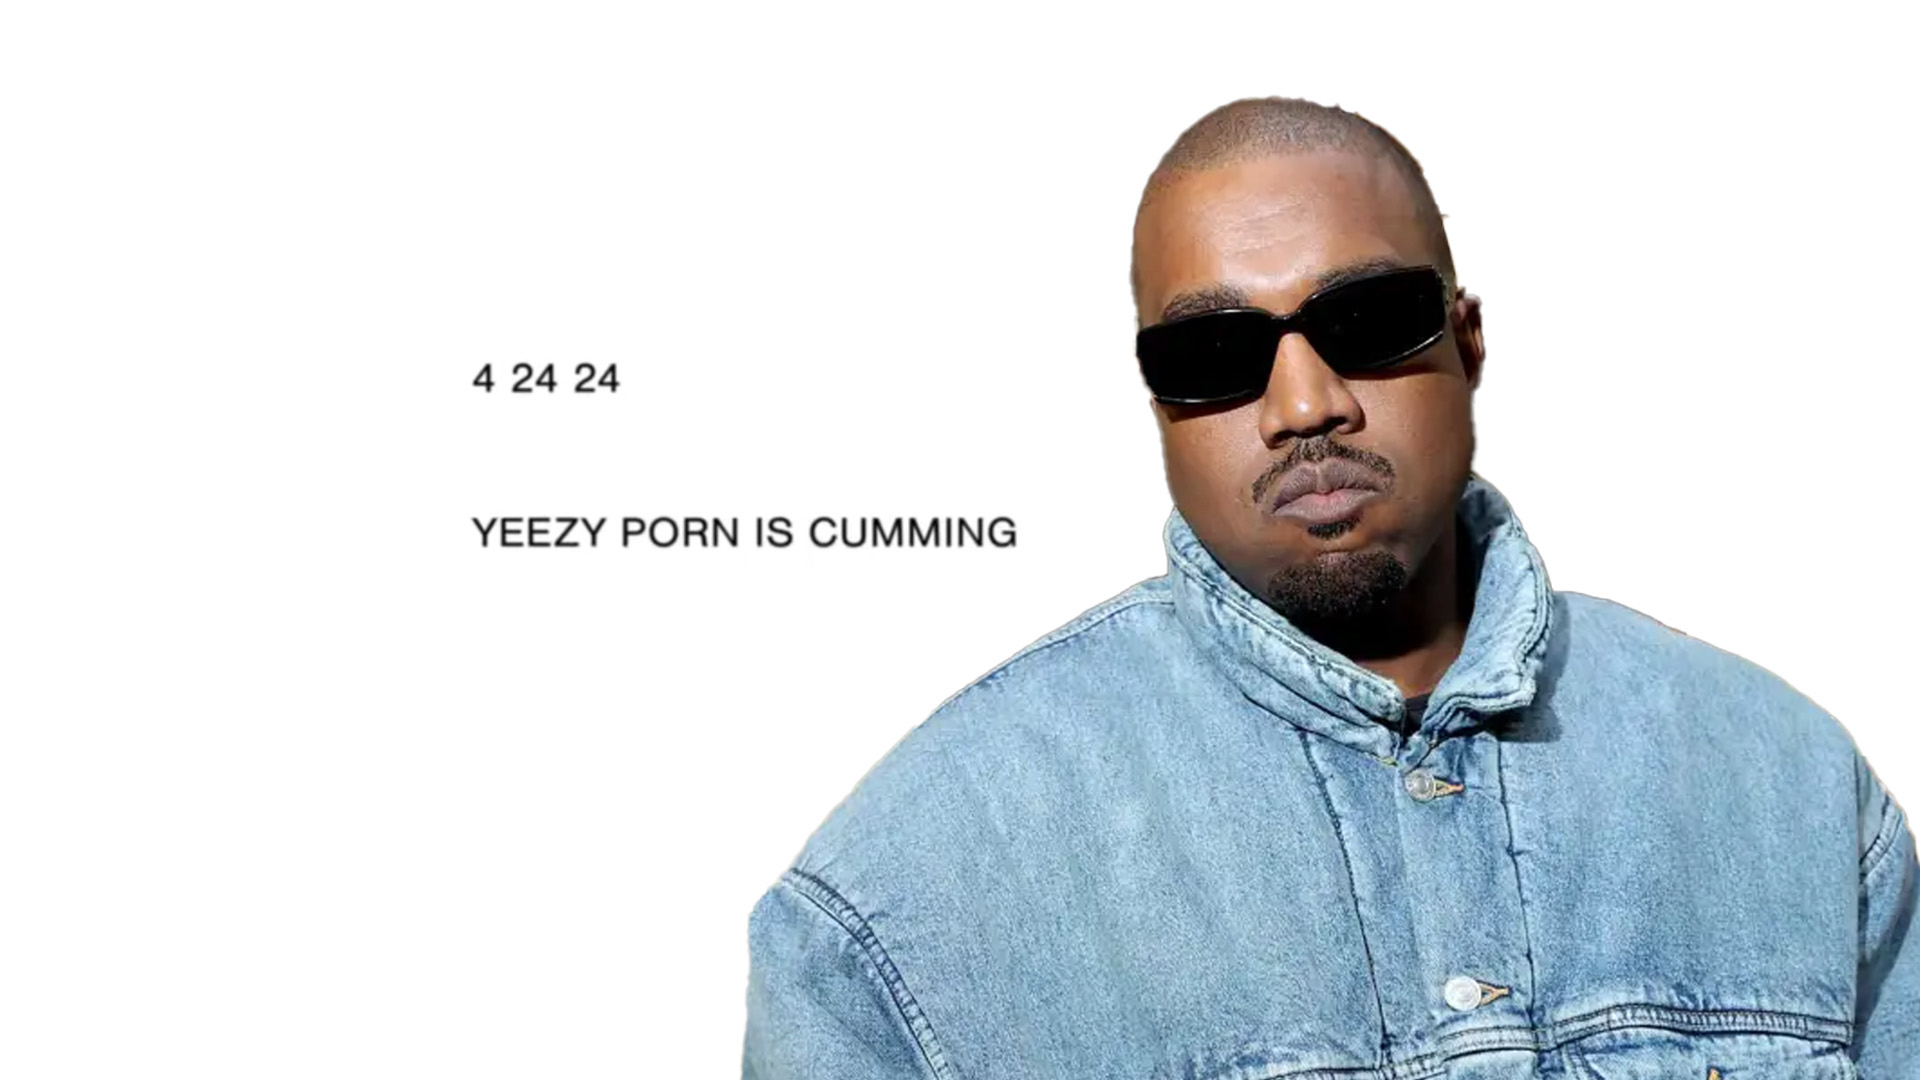 Kanye West Announces Yeezy Adult Film Site